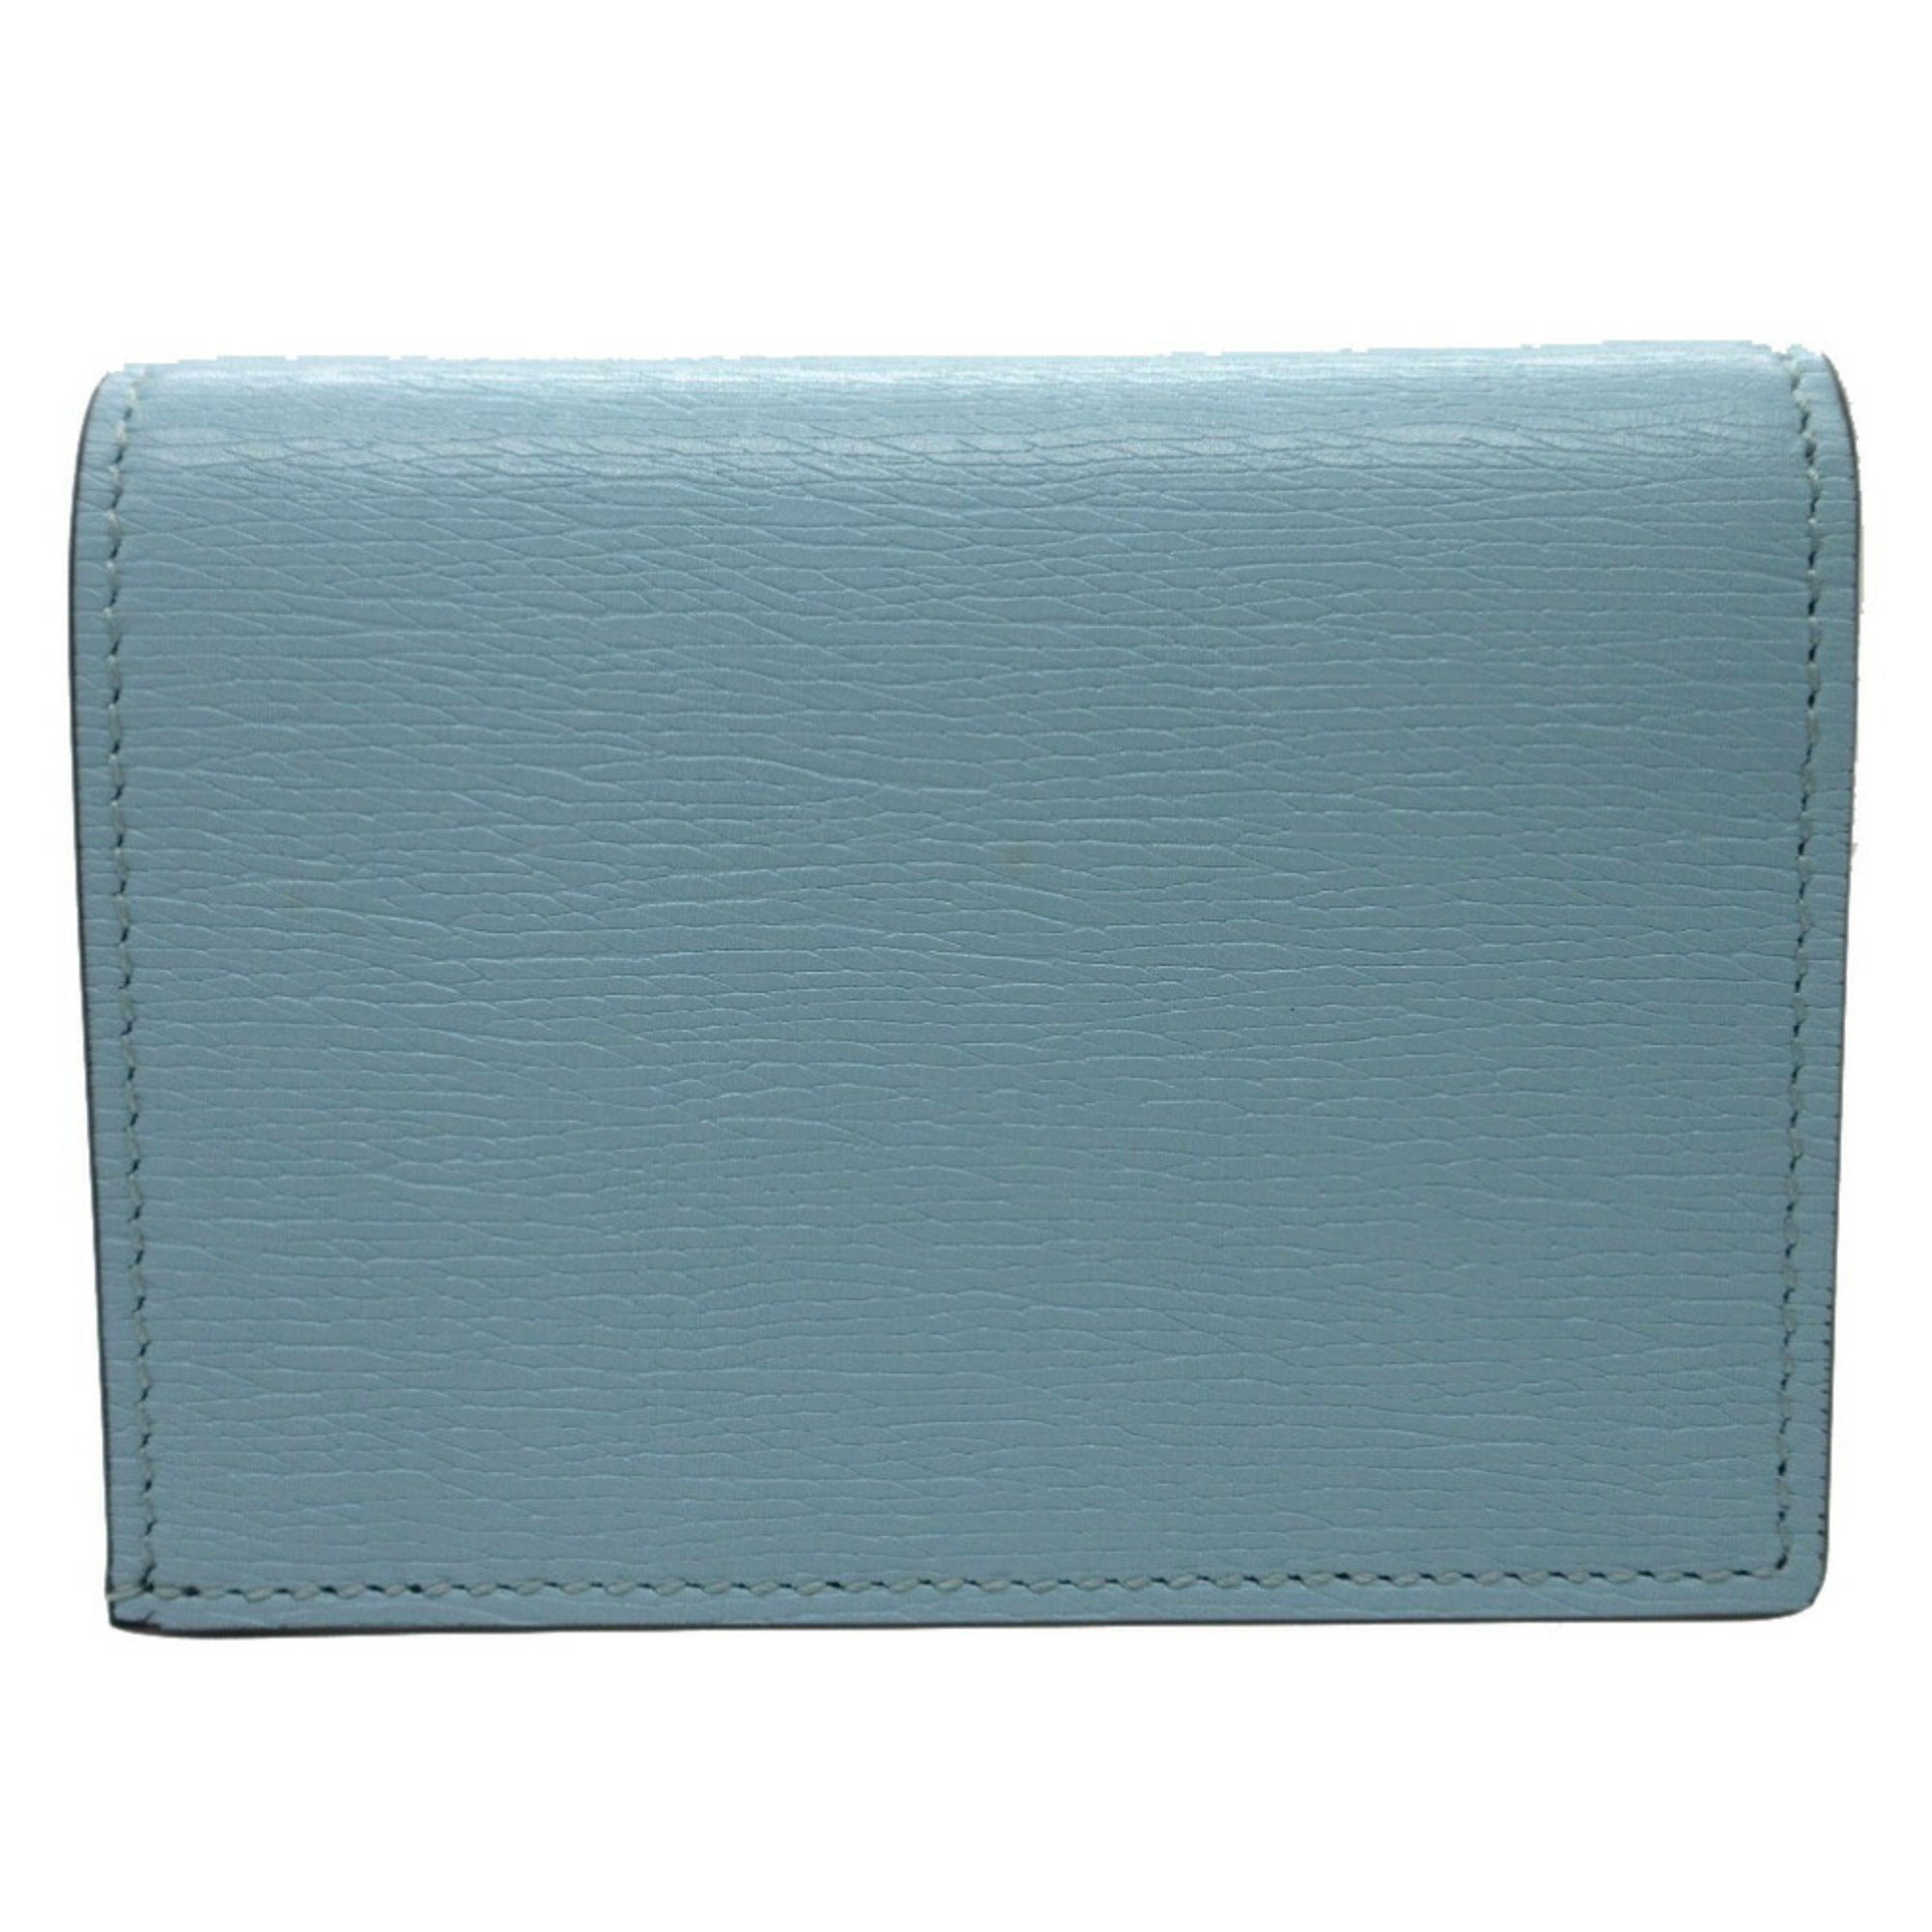 Gucci Bananya Banana Rainbow & Star 701009 Bi-fold wallet Leather Blue Light blue 0121GUCCI